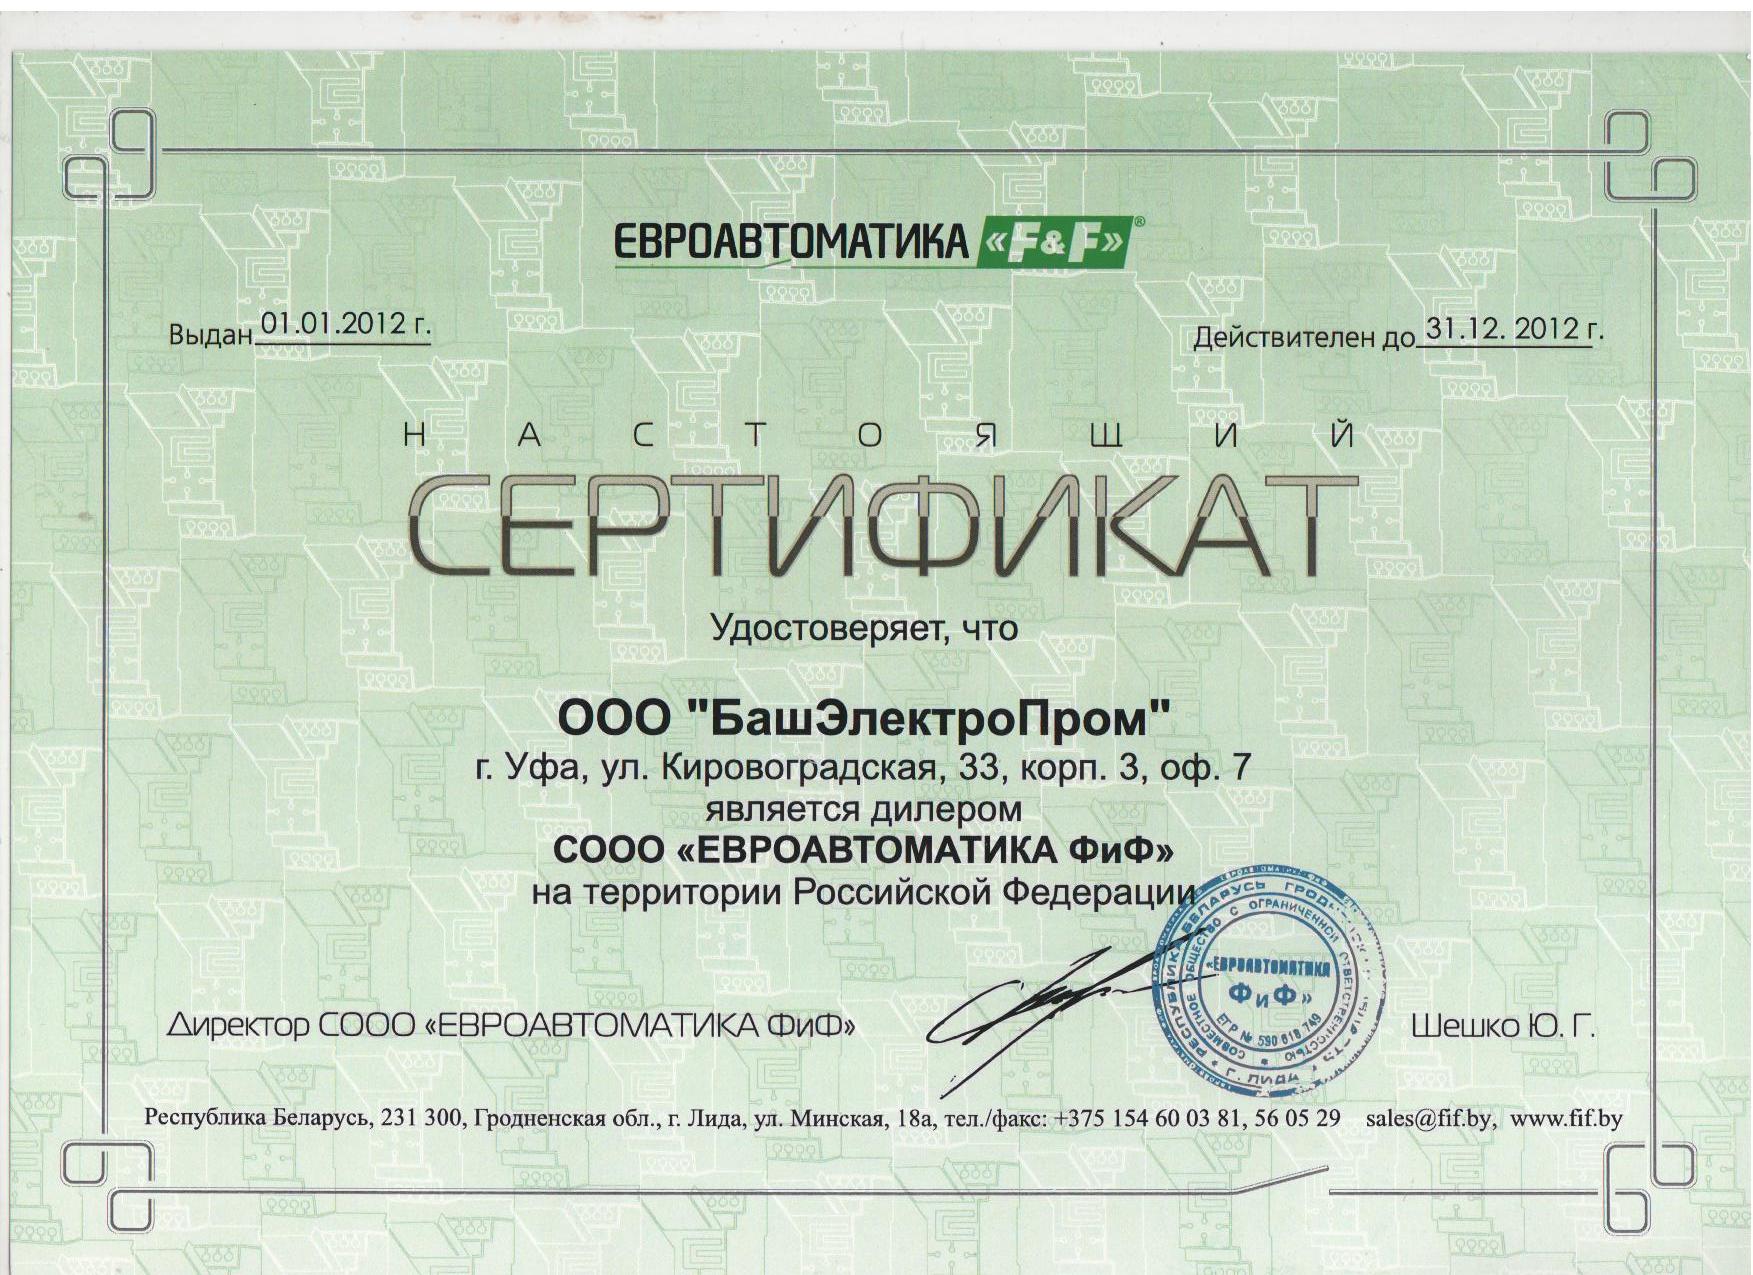 Сертификат дилера Евроавтоматика ФиФ